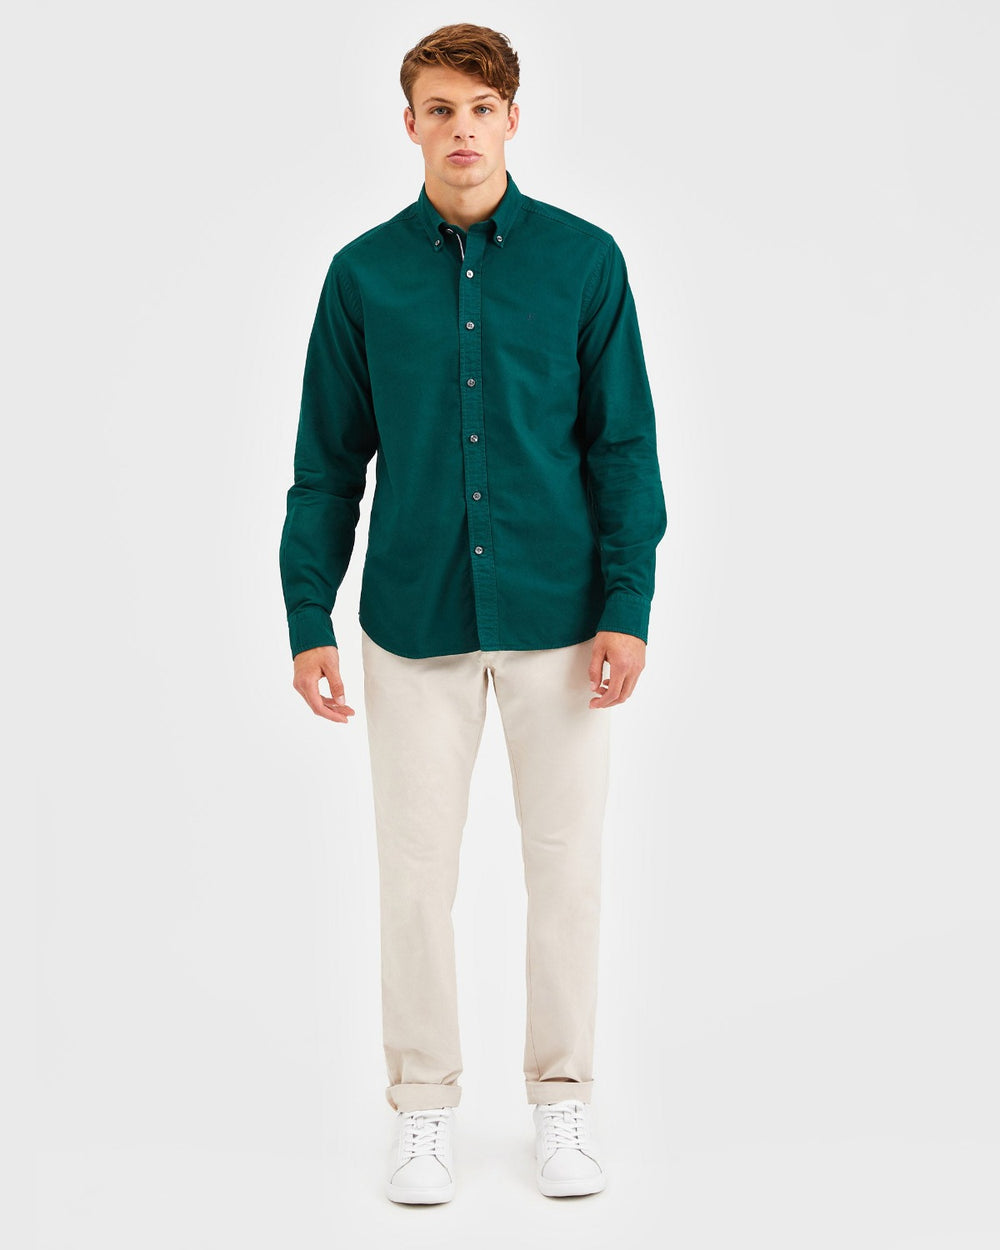 Beatnik Oxford Garment Dye Shirt - Forest Green